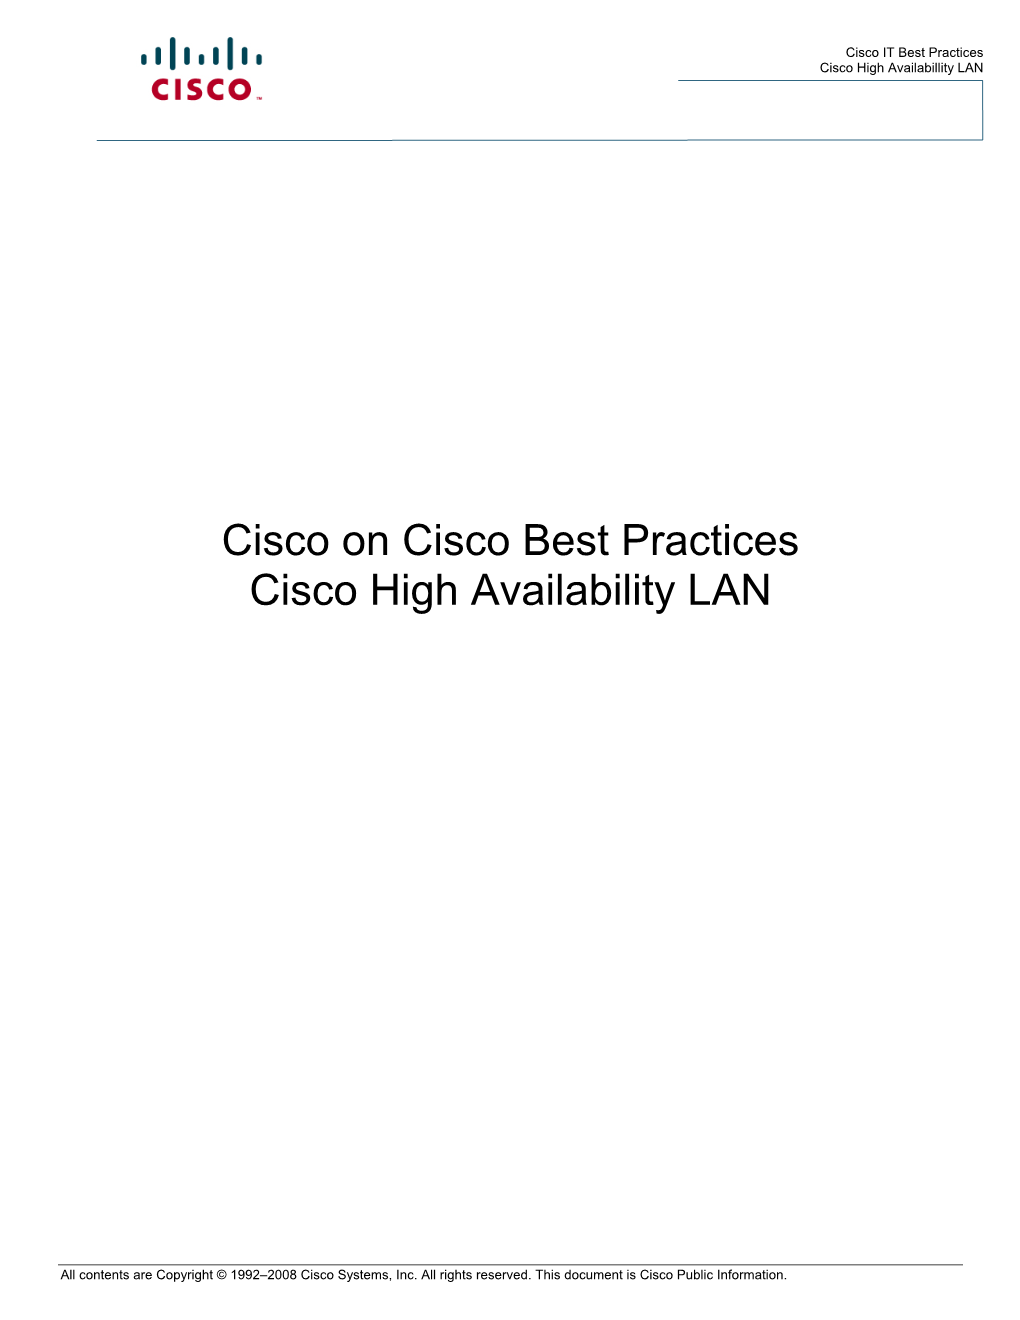 Cisco on Cisco Best Practices Cisco High Availability LAN